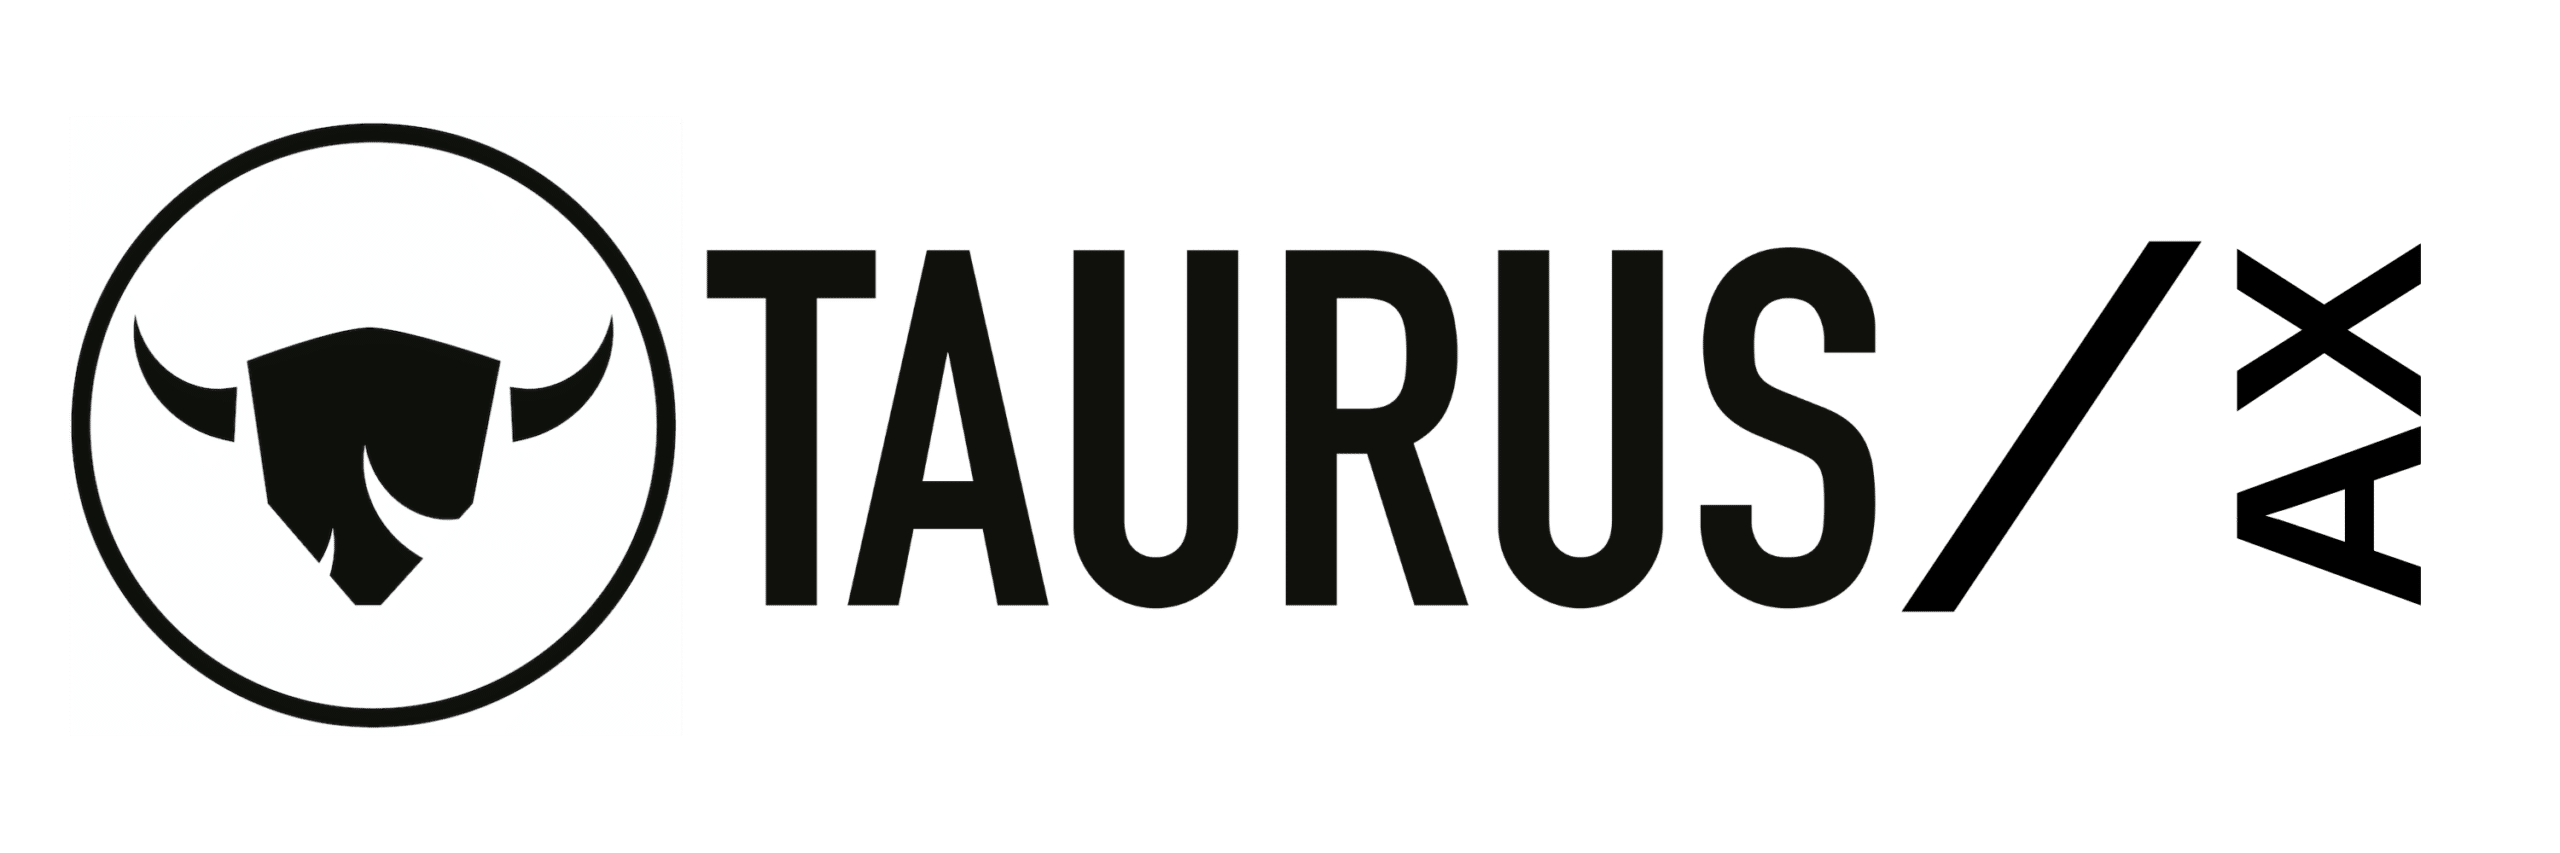 TAURUS-AX Logo